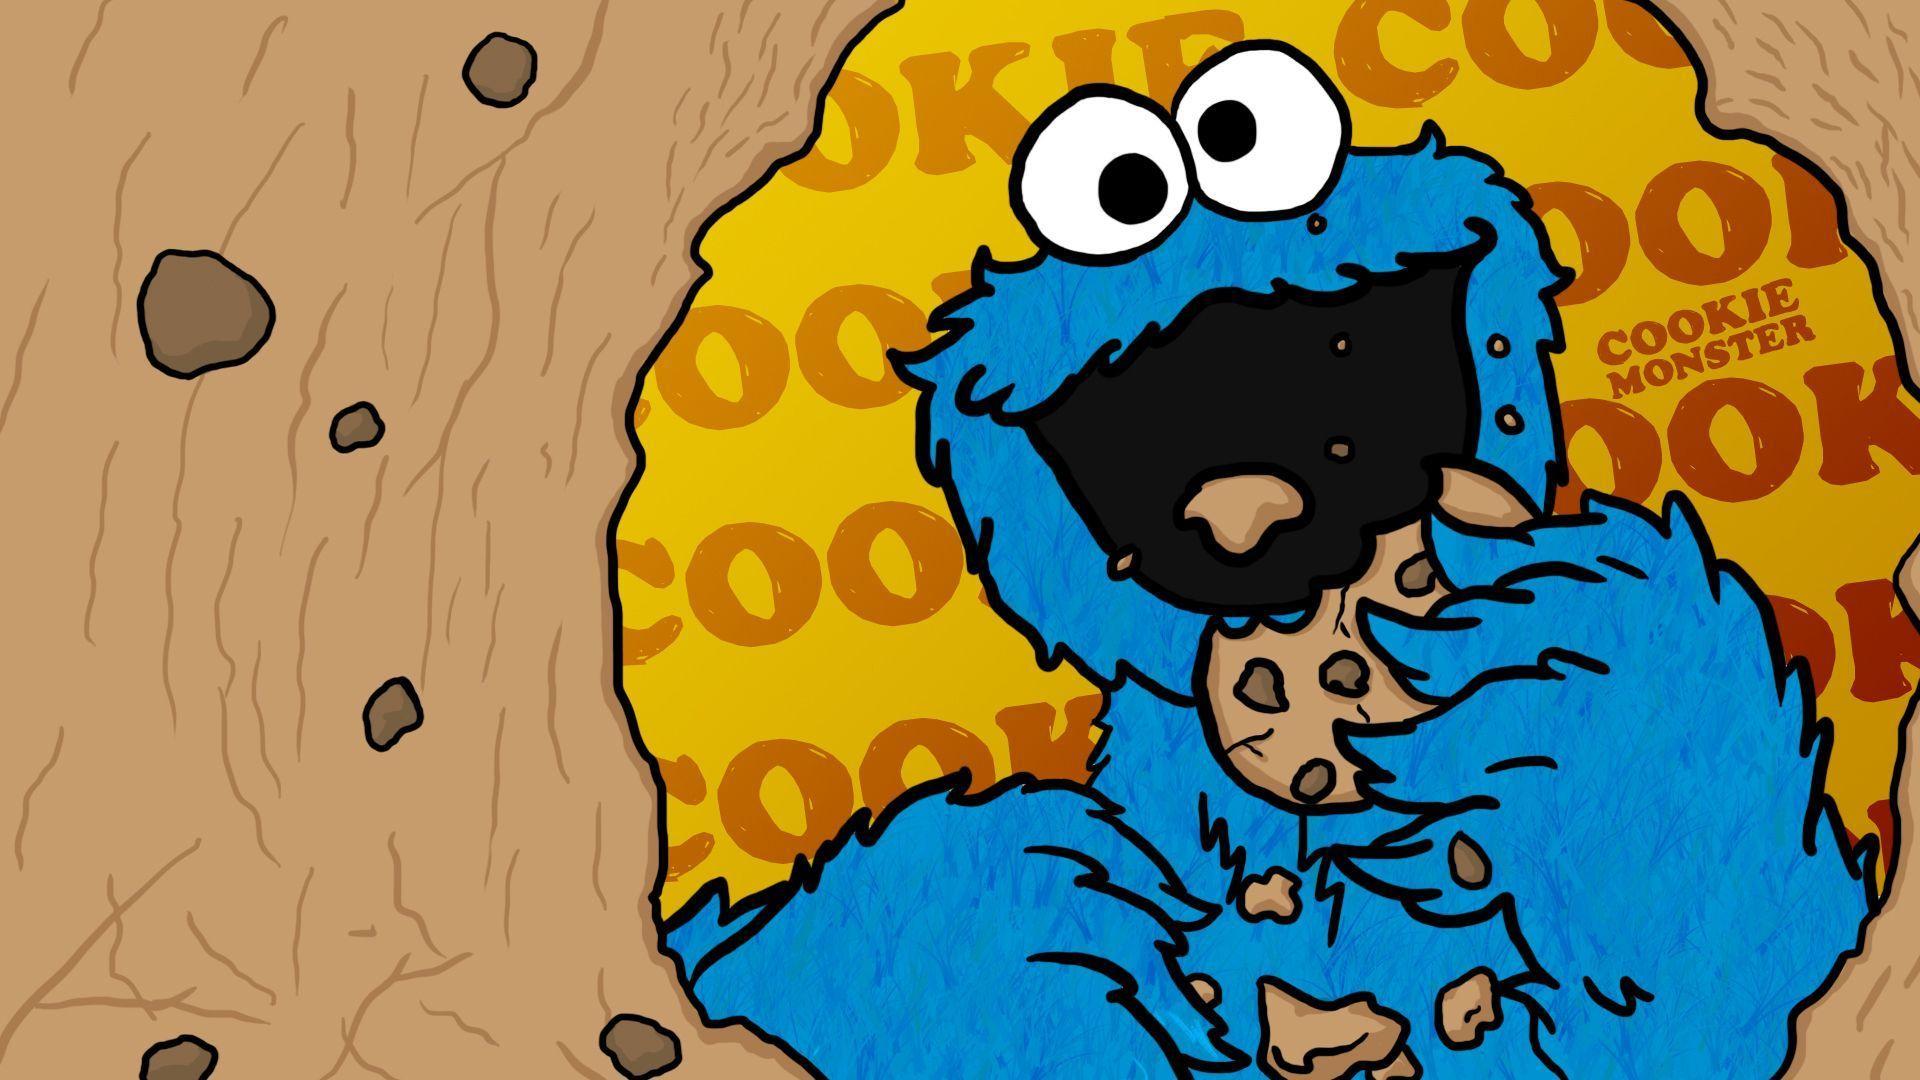 Cookie Monster Wallpaper Hd -